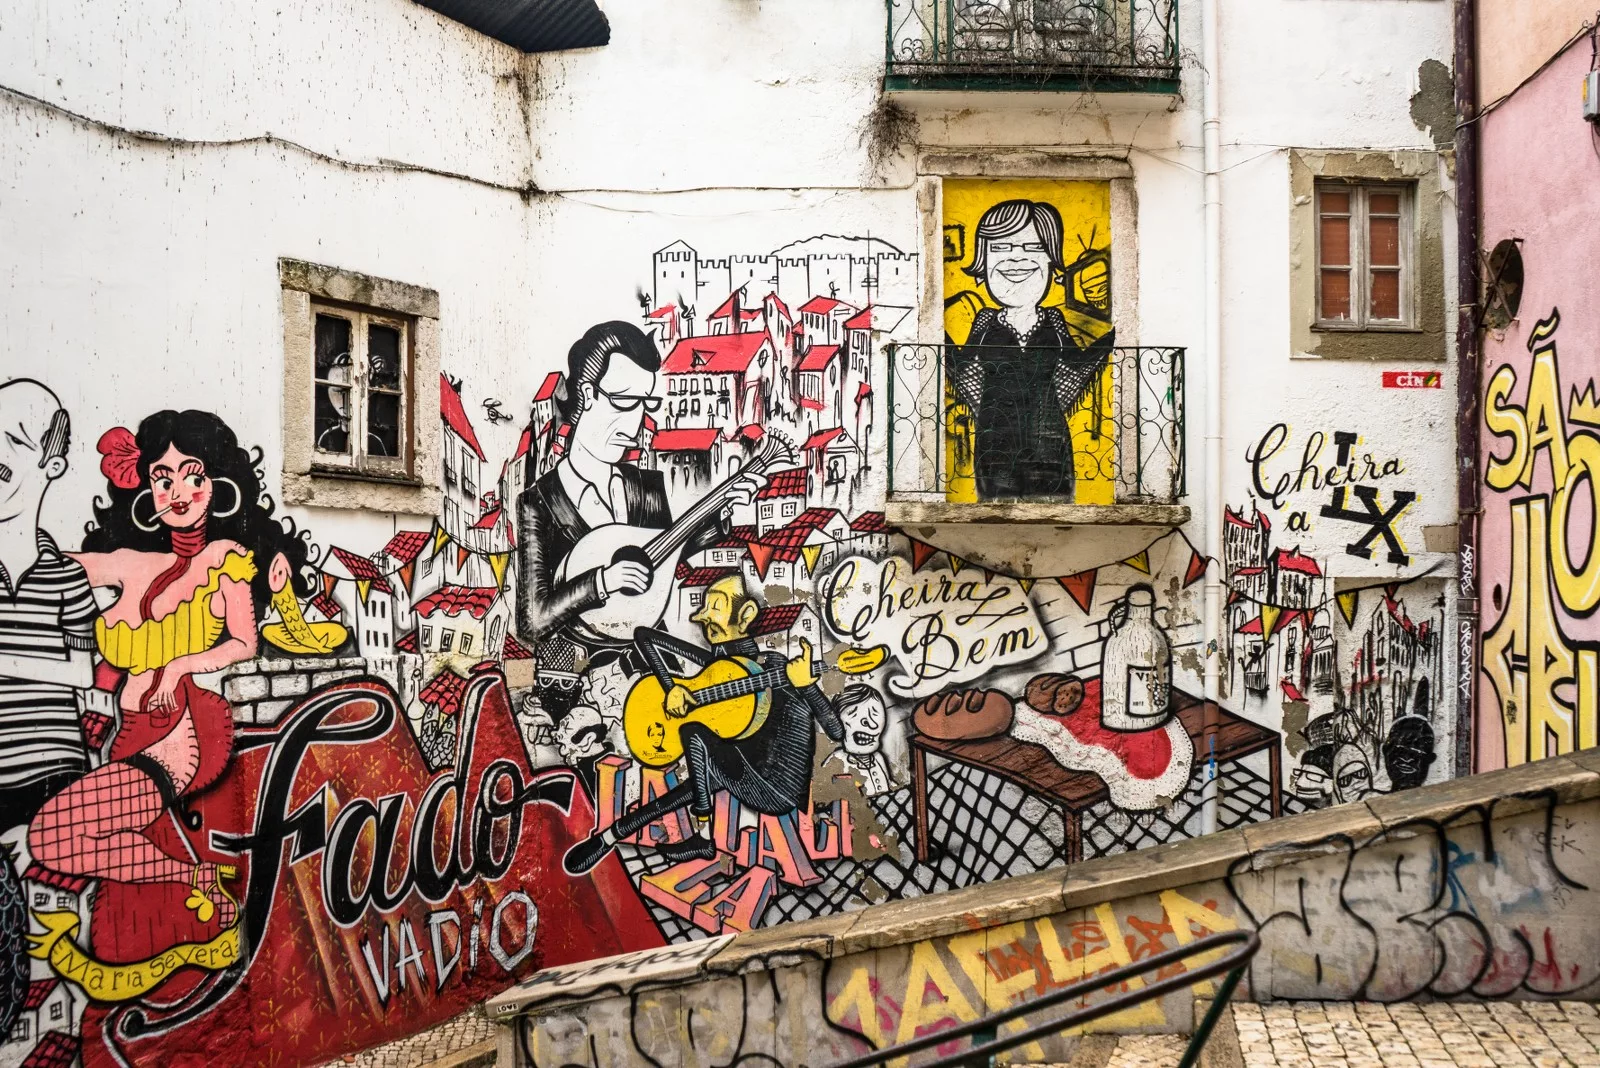 Fado Vadio, Lisbon, Portugal